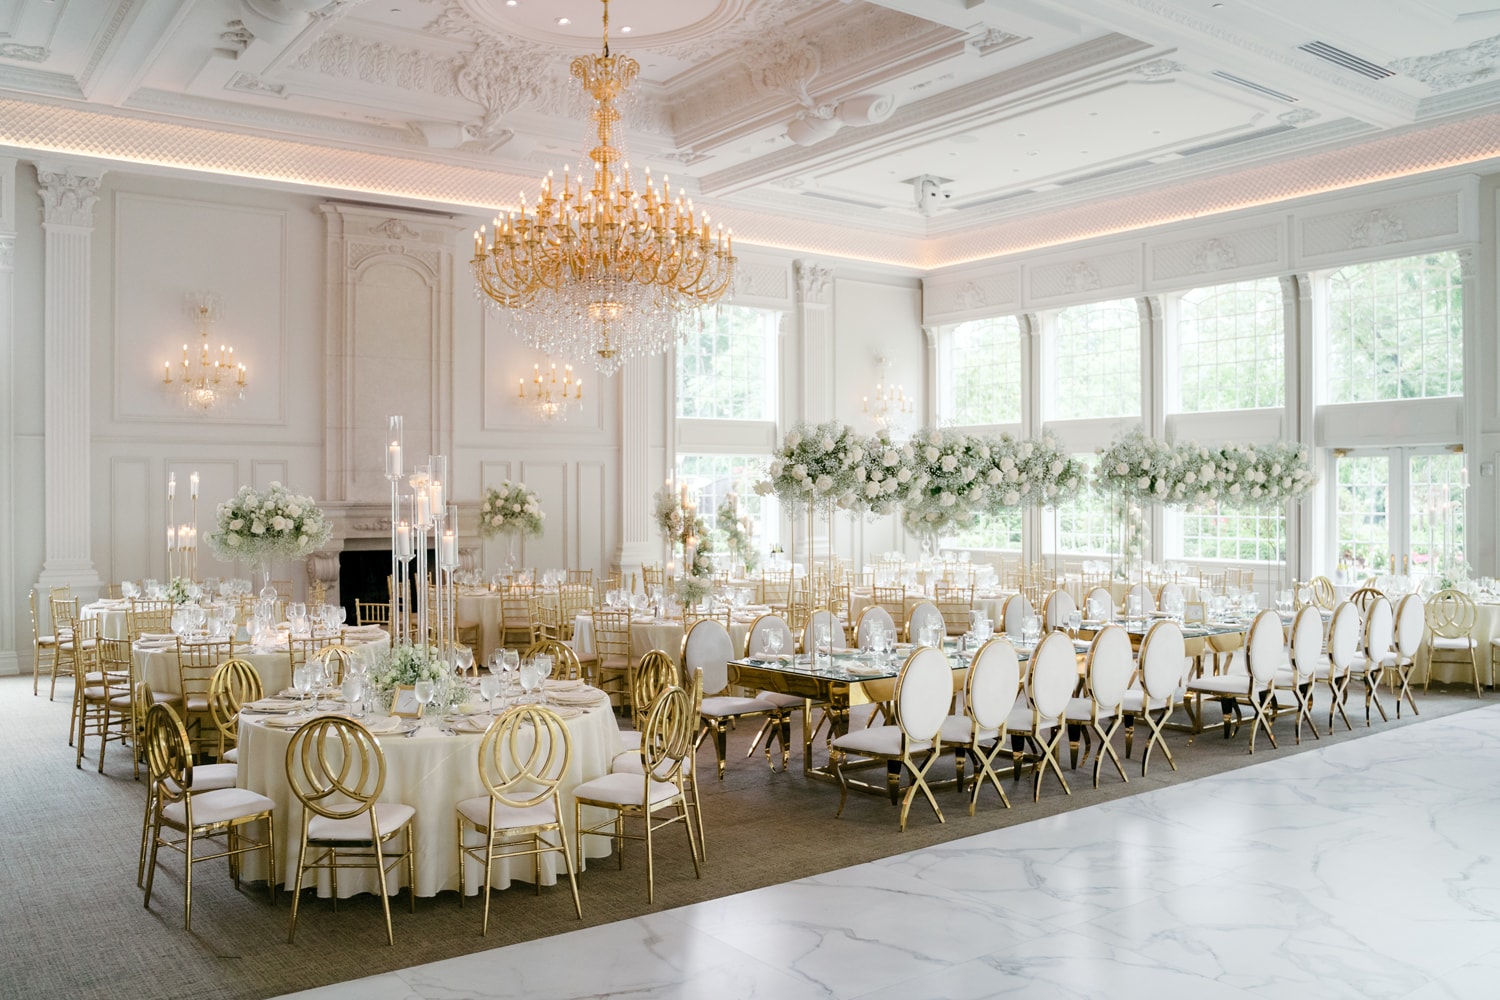 Florentine gardens wedding reception setting